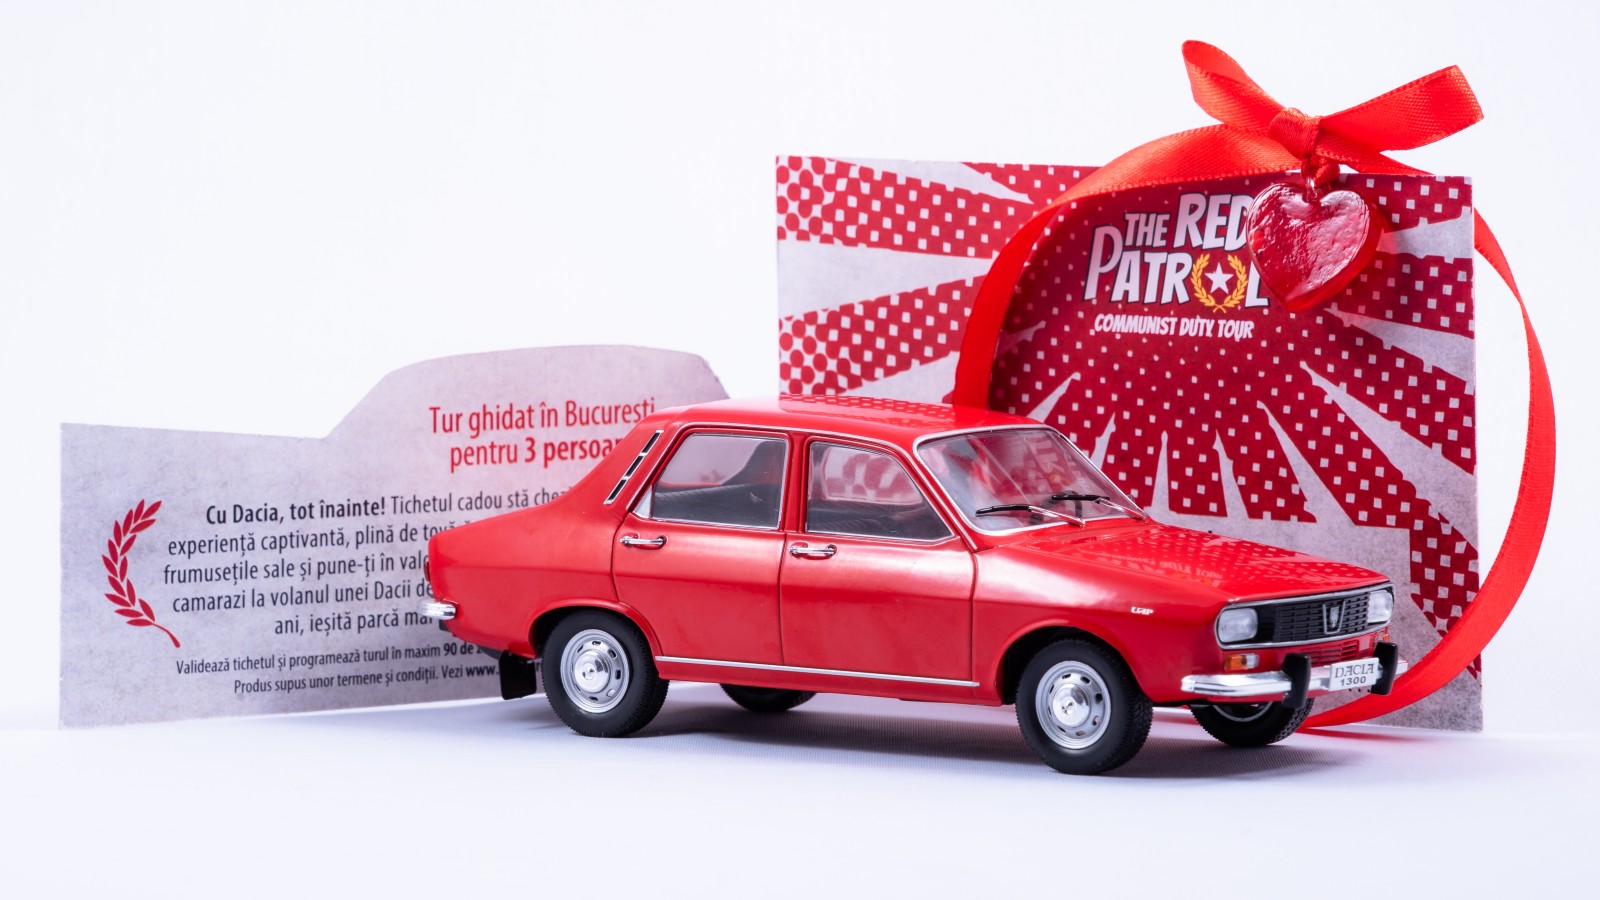 RedPatrol - Cu Dacia tot inainte!